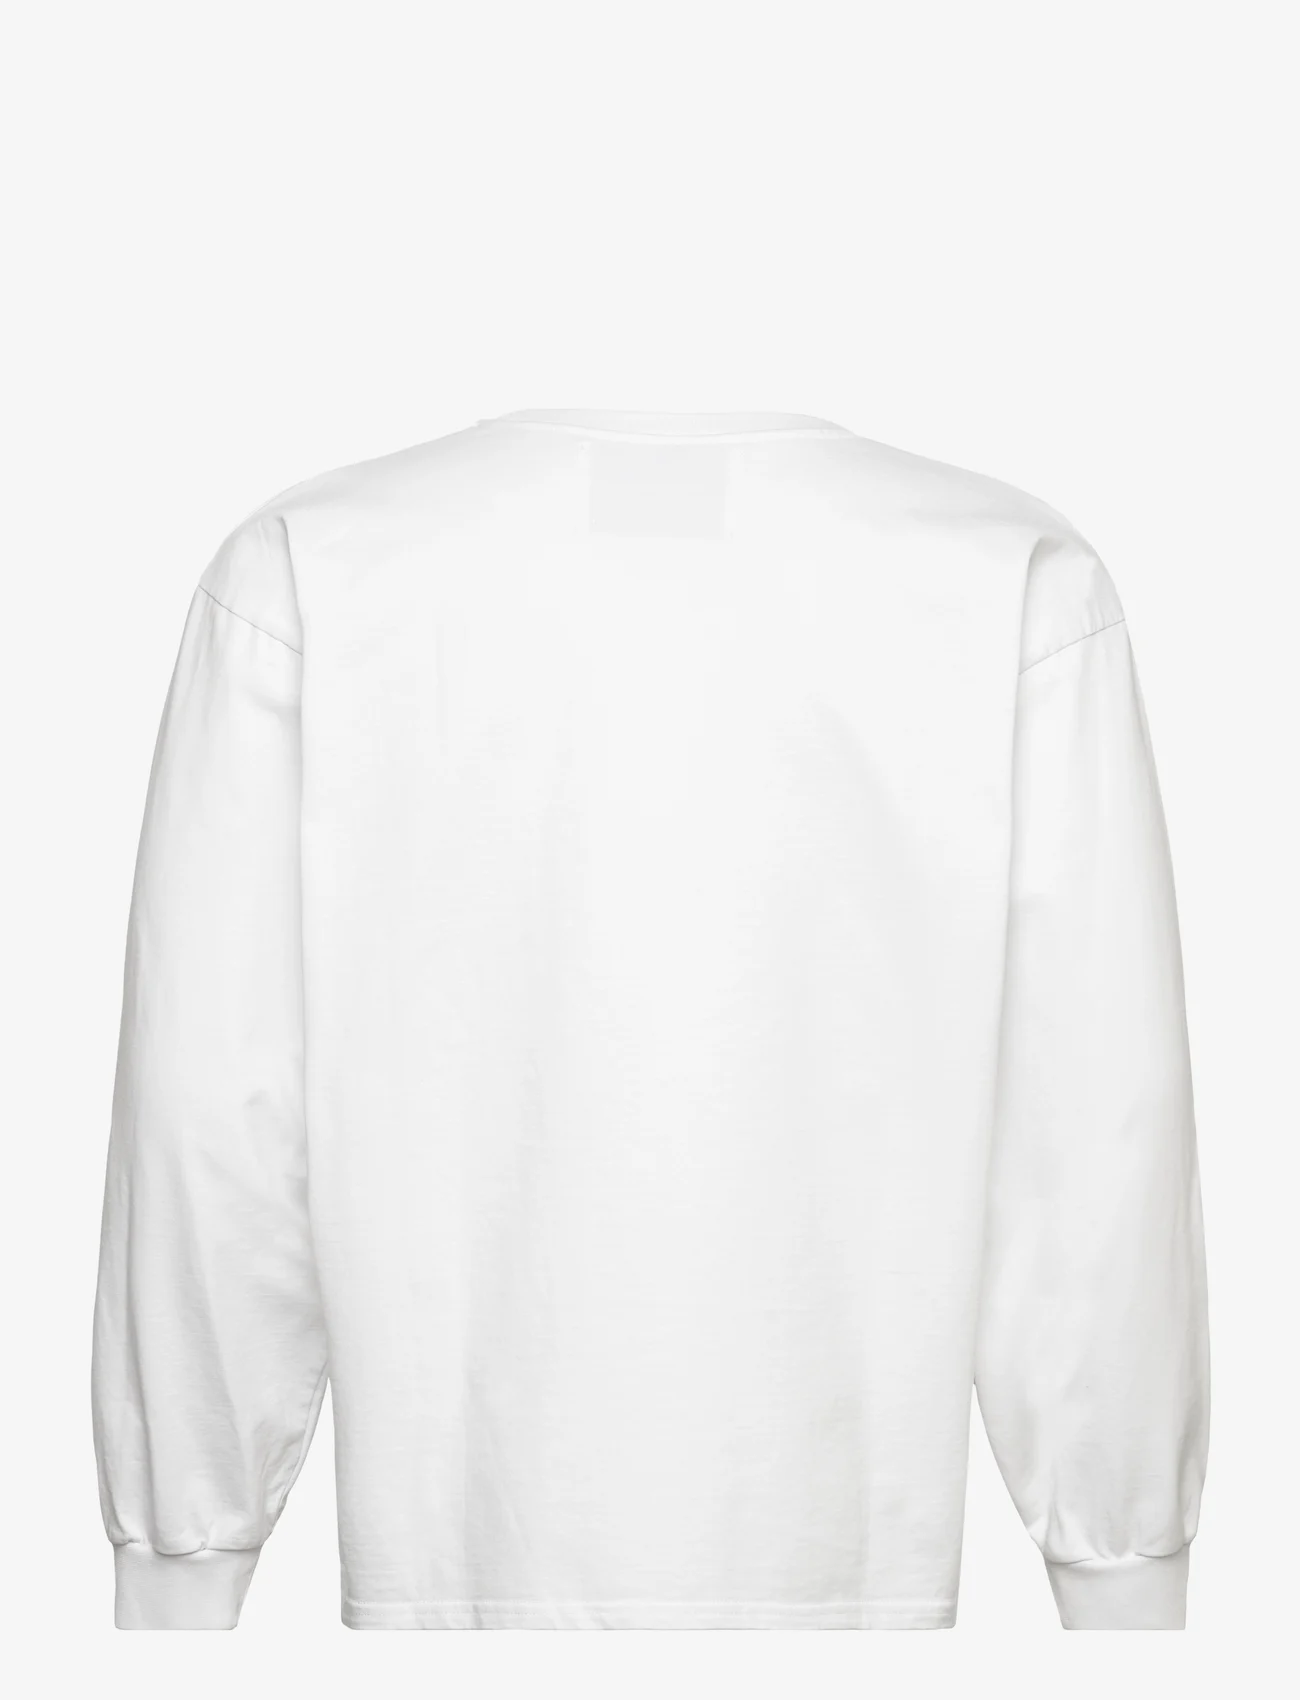 Garment Project - Heavy L/S Tee - White - pitkähihaiset - white - 1